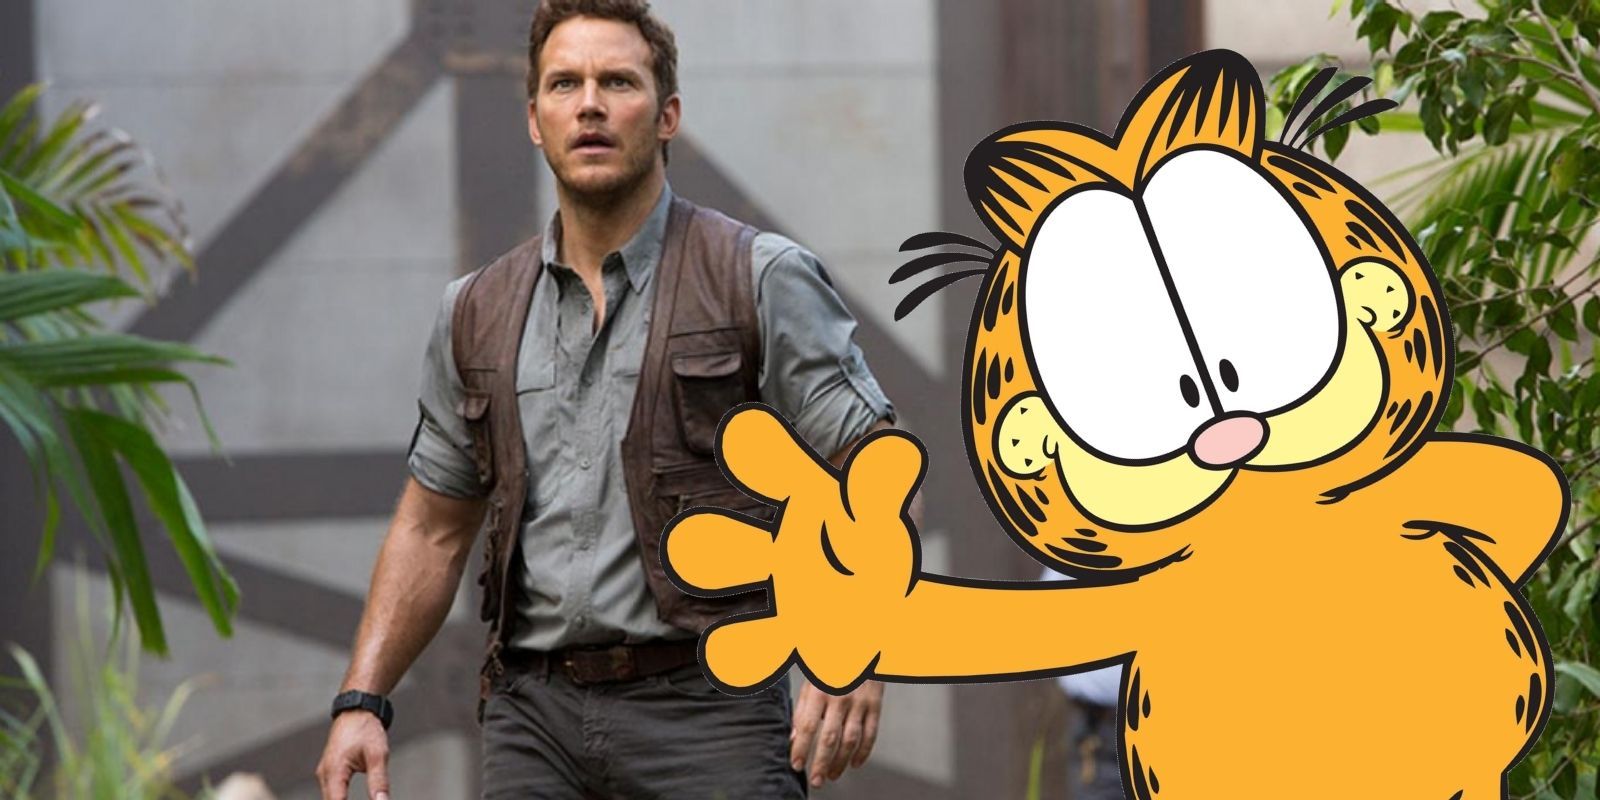 Chris Pratt in Jurassic World alongside Garfield